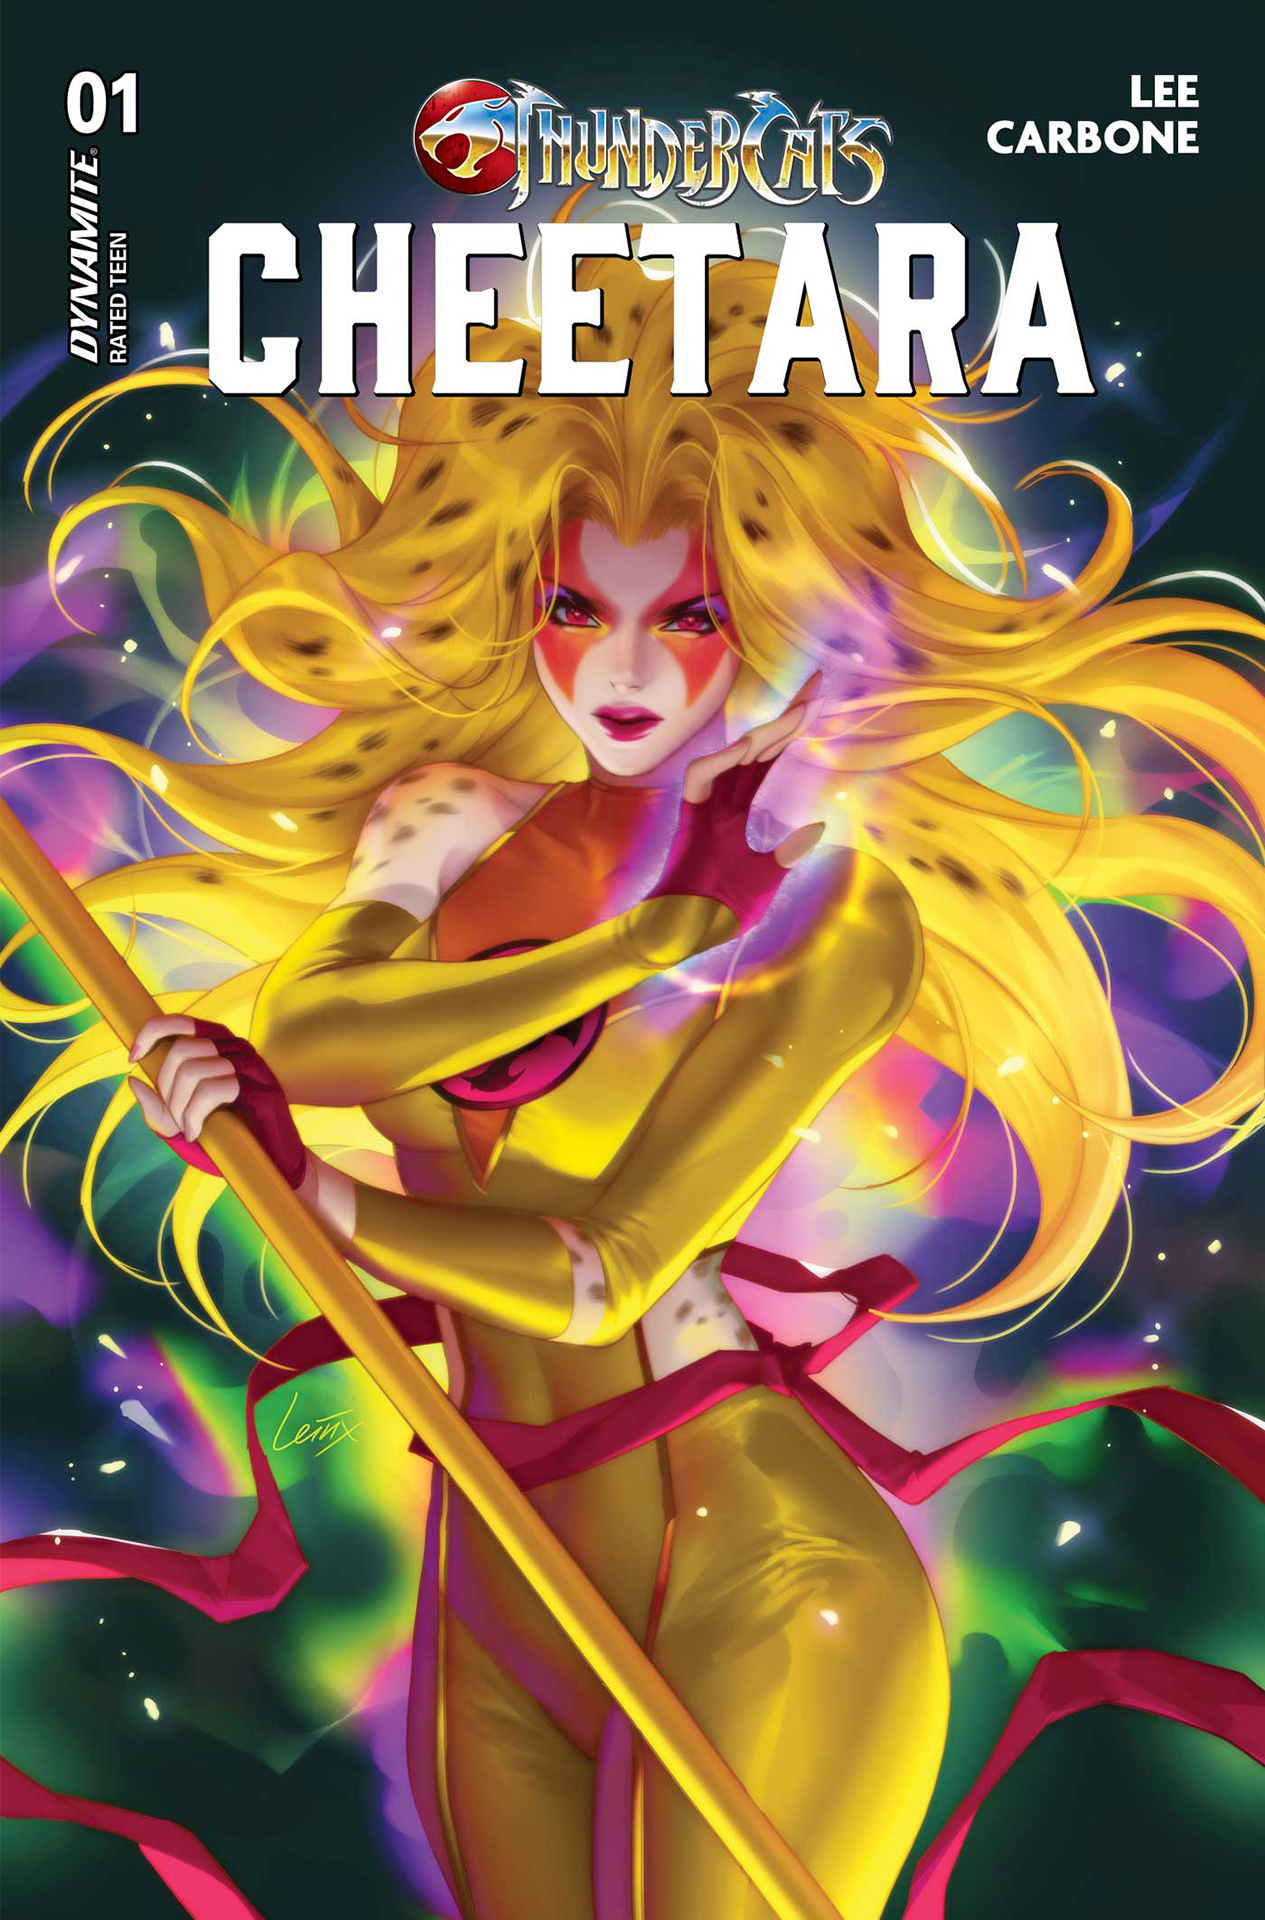 Cheetara #1 cover art